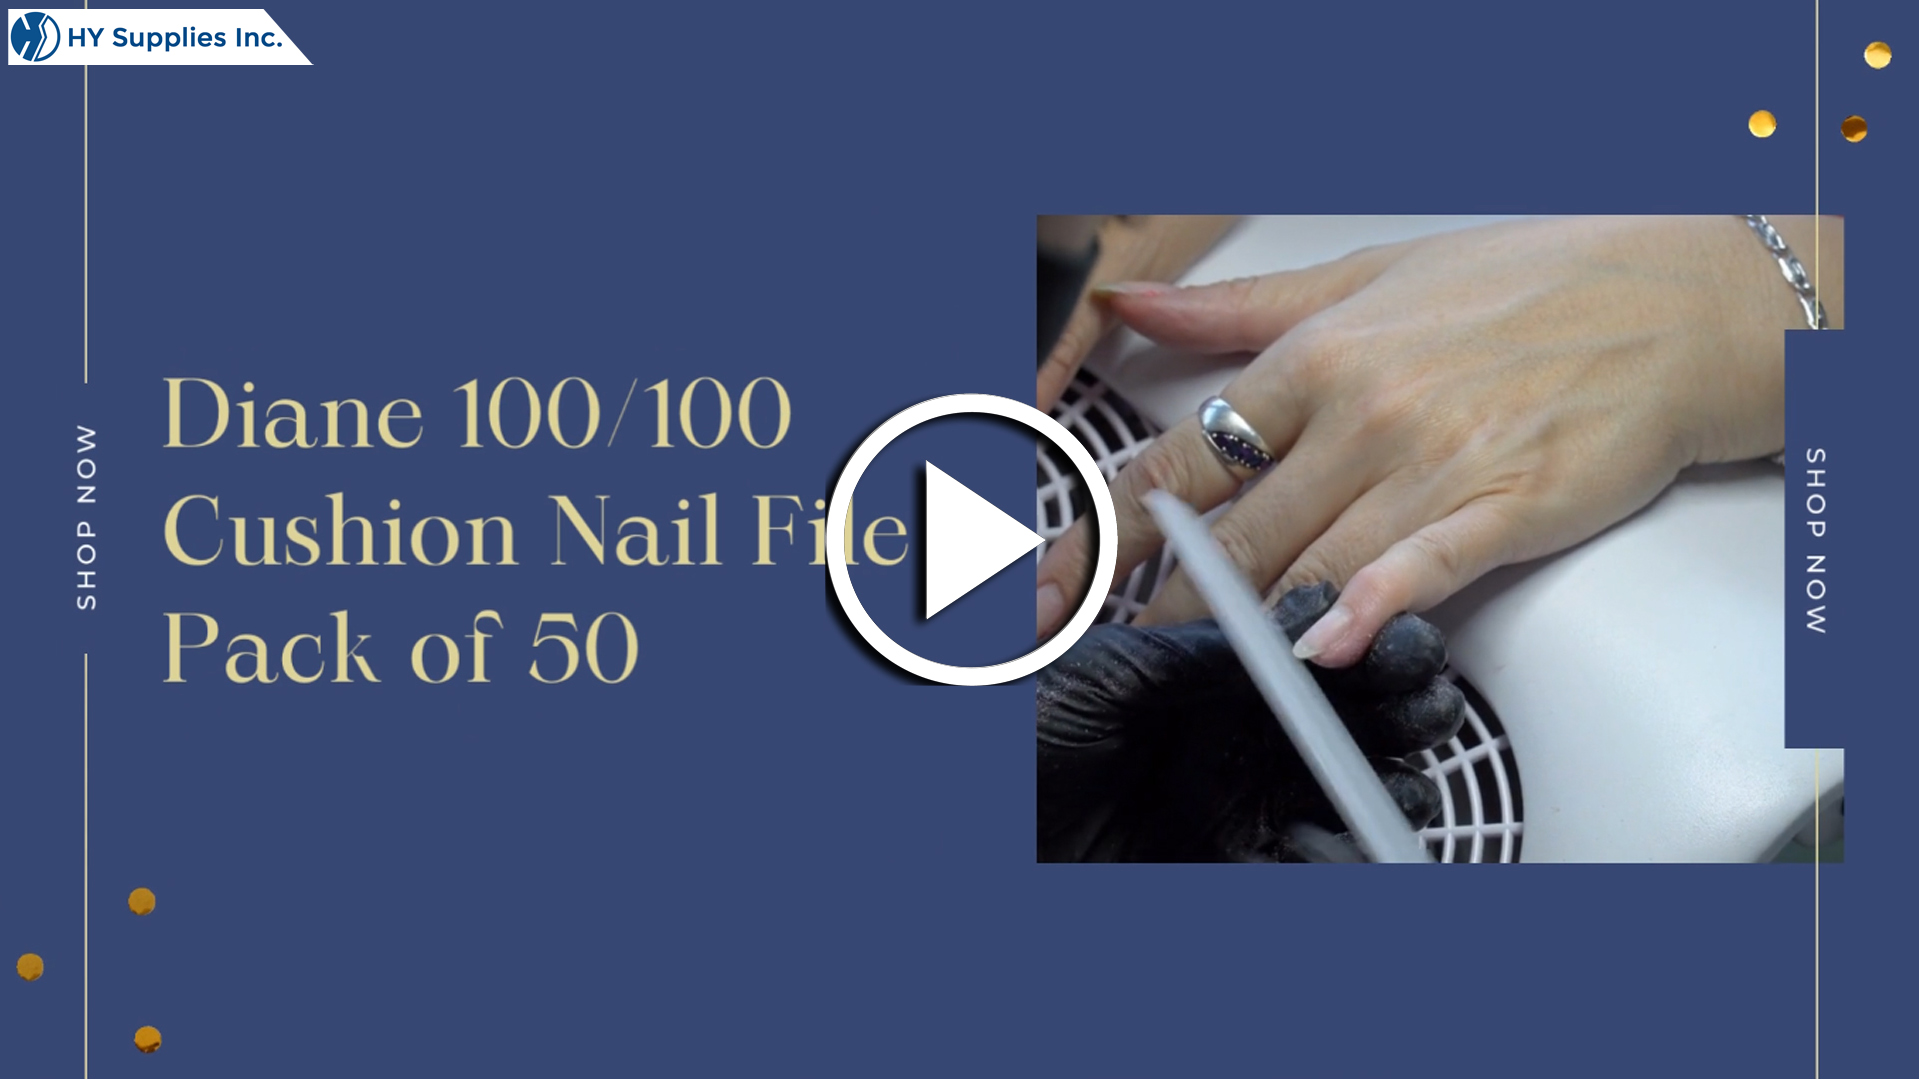 Diane 100/100 Cushion Nail File - Pack of 50